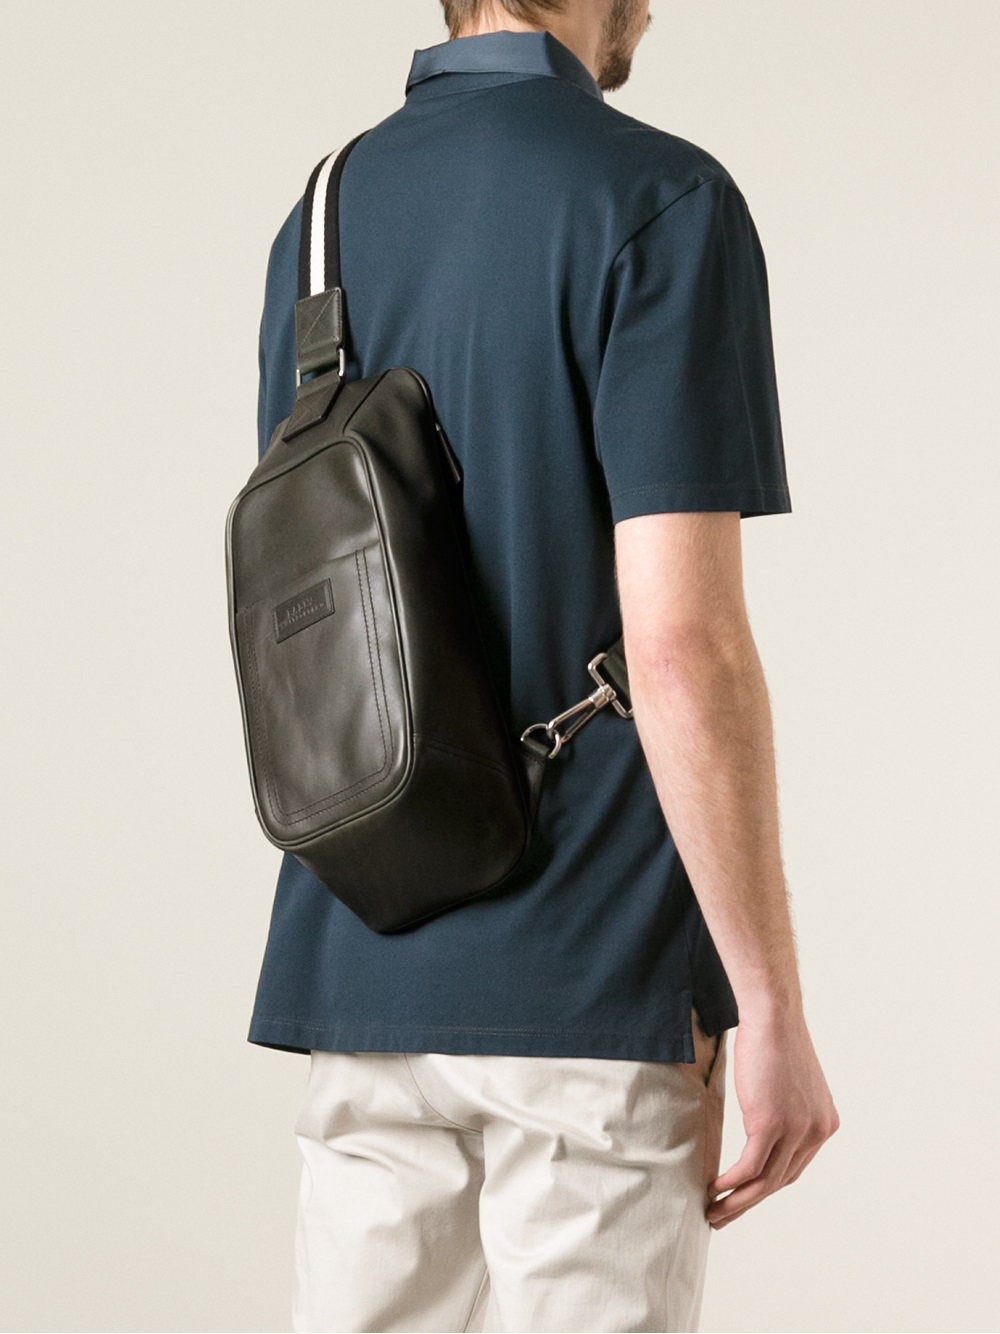 Lyst - Bally Single Strap Backpack in Green for Men